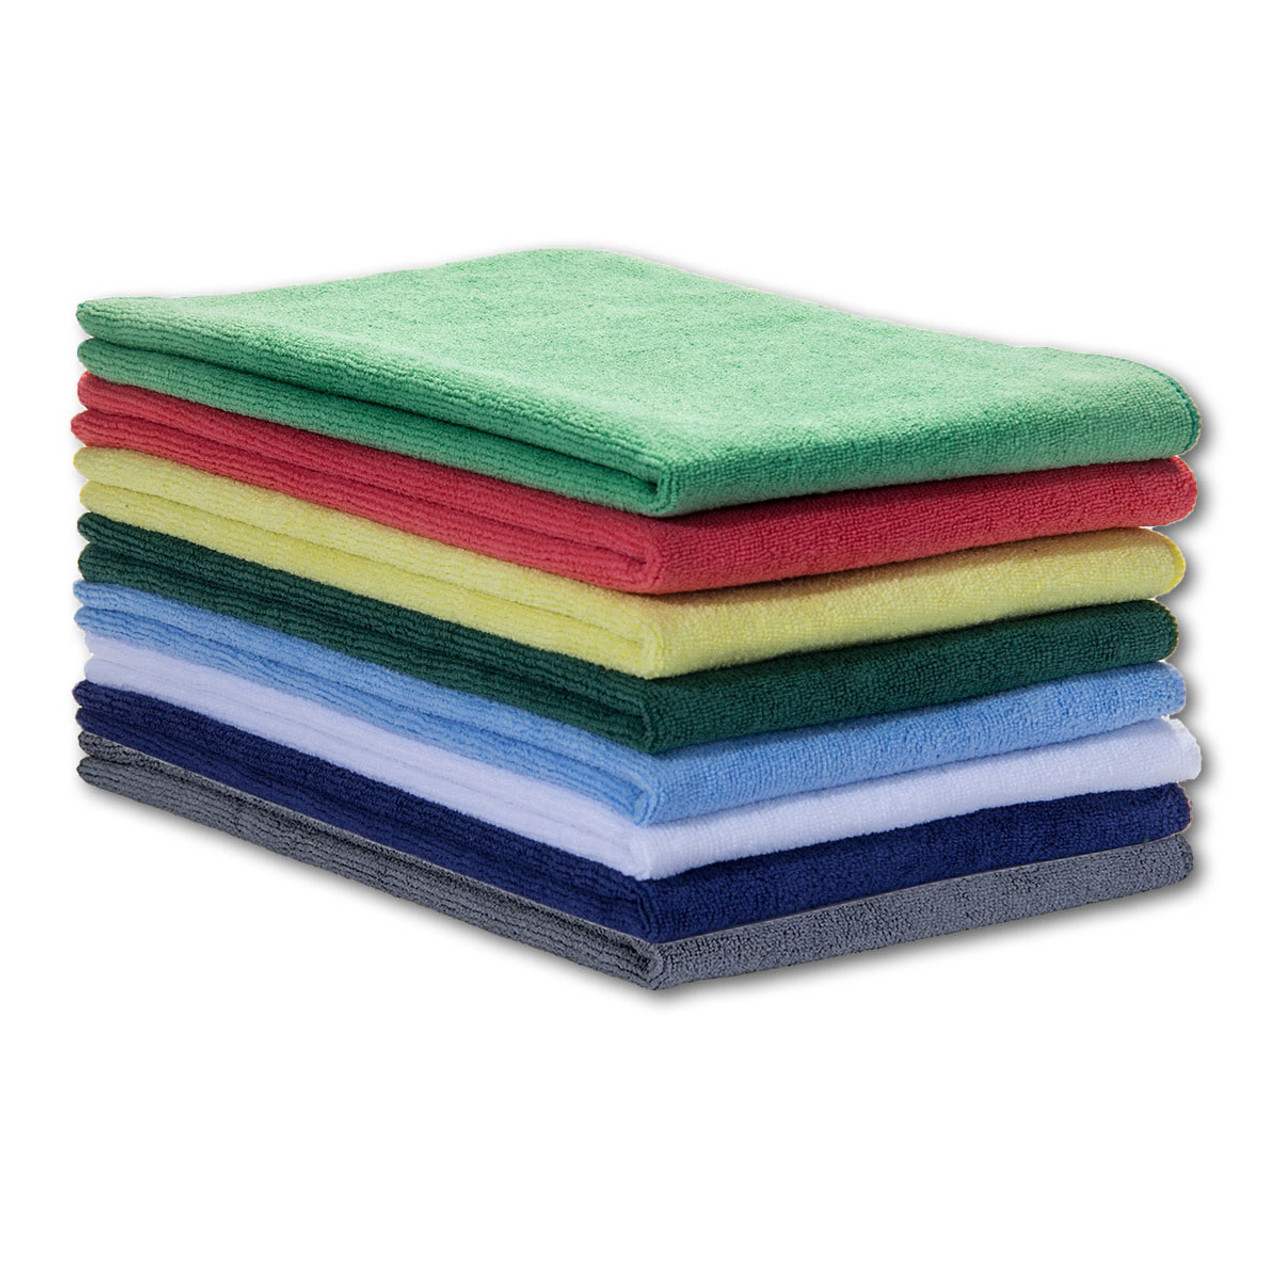 Wholesale Microfiber Towels 16x27 50 Packs